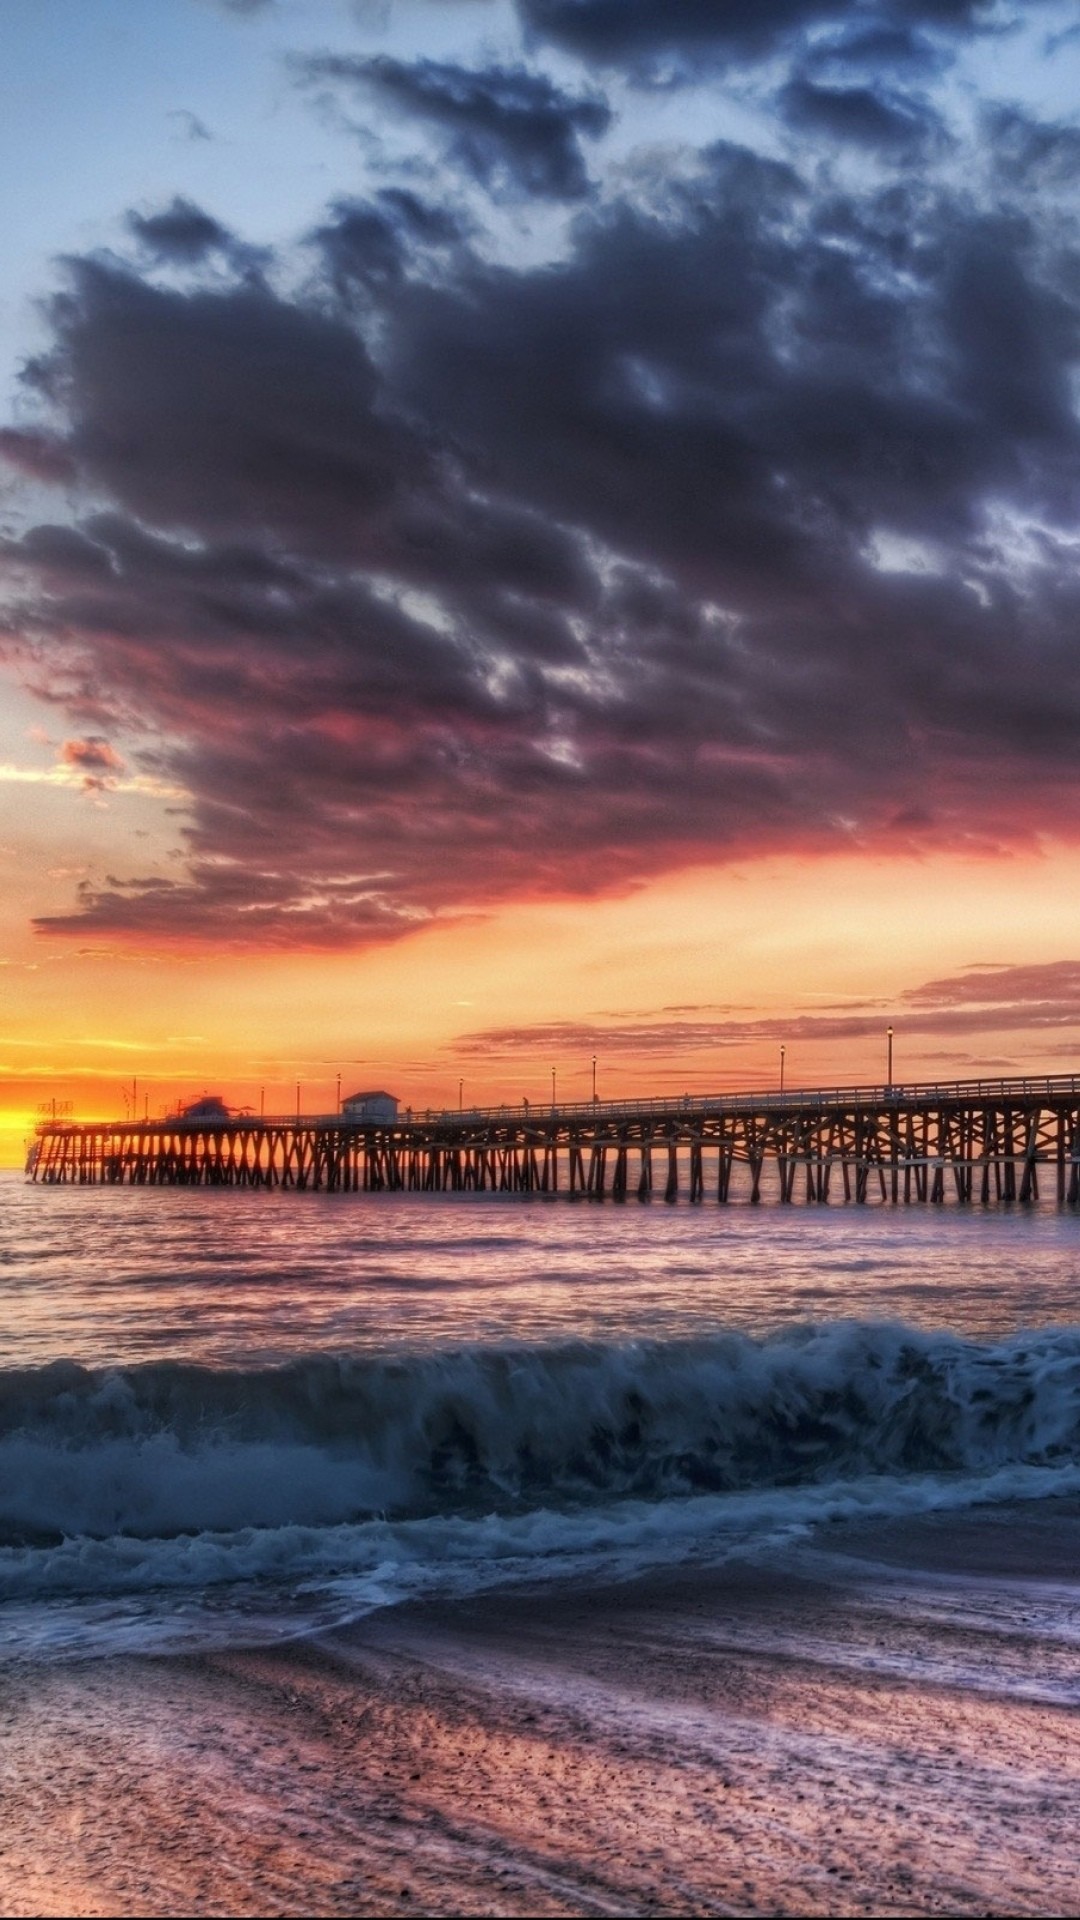 1080x1920 California Beach Dock Sunset iPhone 6 Wallpaper Download | iPhone .